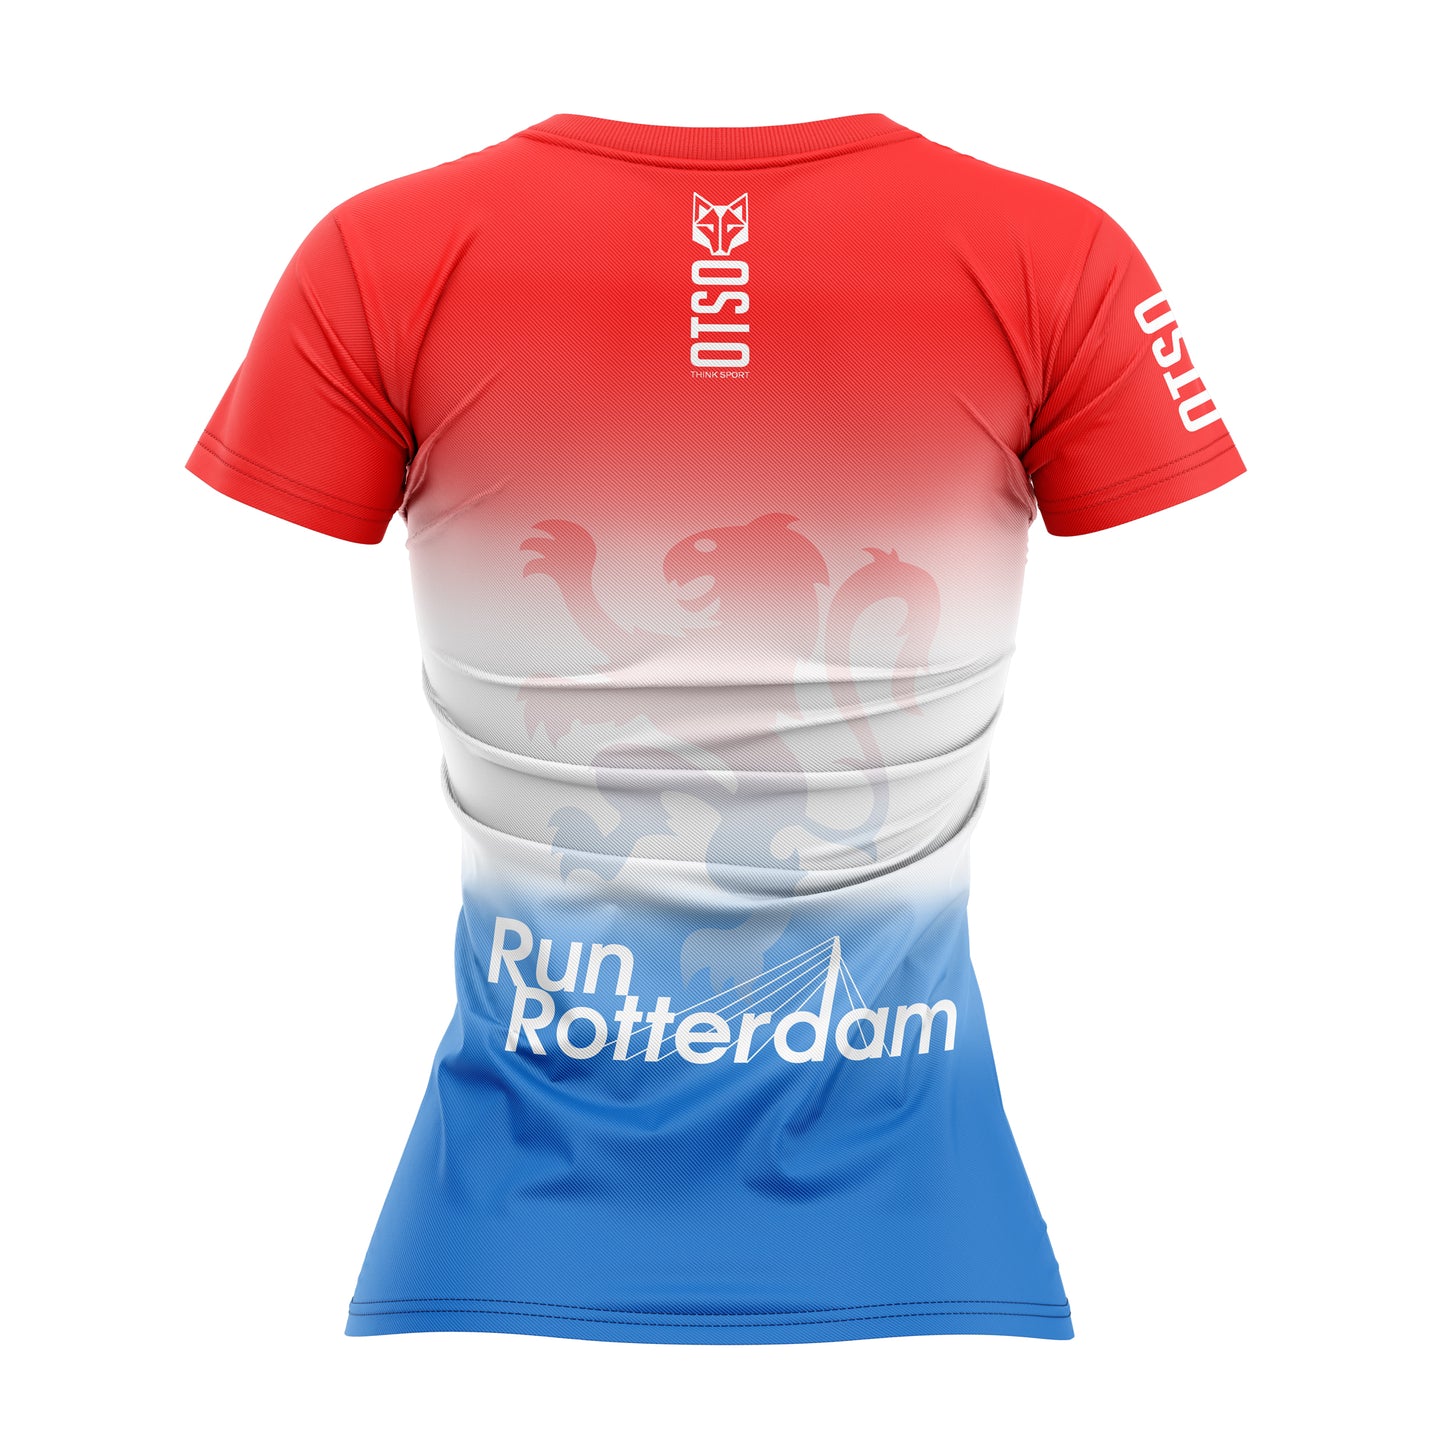 Samarreta màniga curta dona - Run Rotterdam (Outlet)